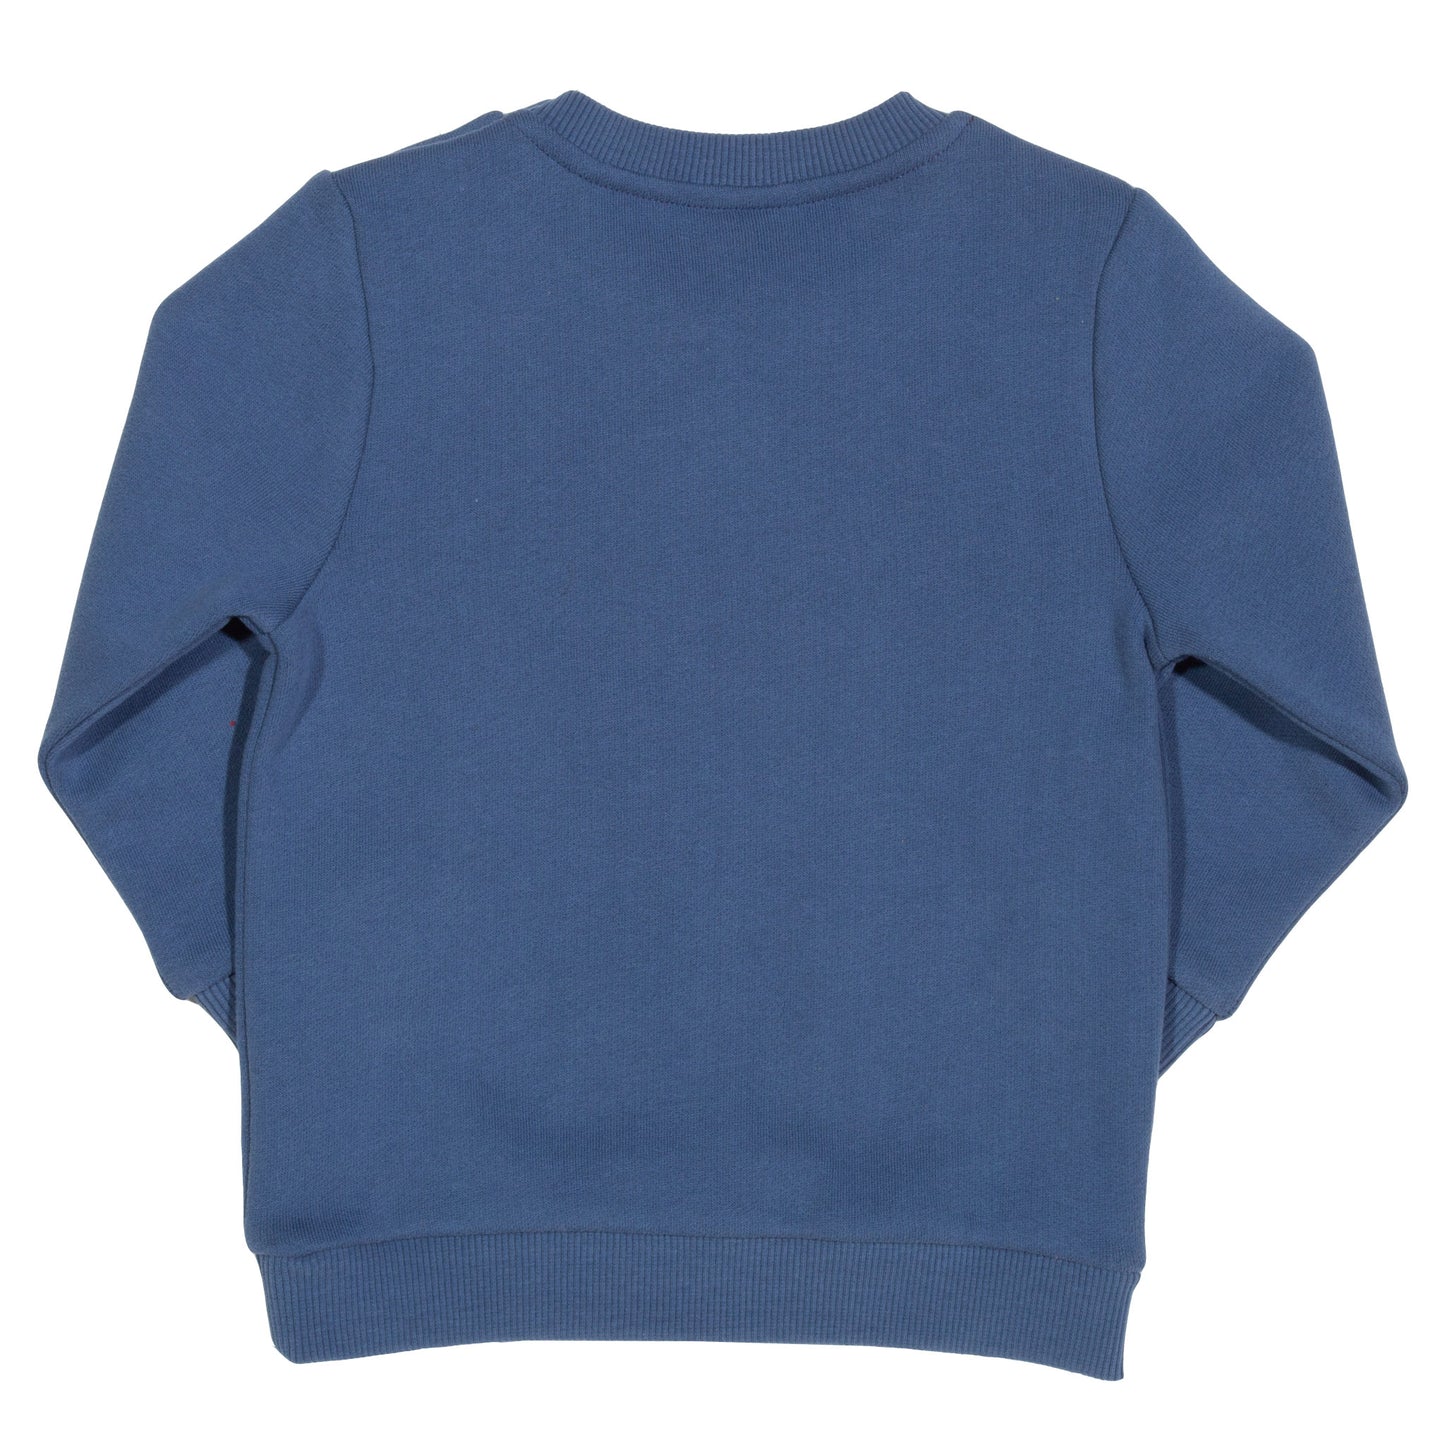 Back of blue off to market sweatshirt